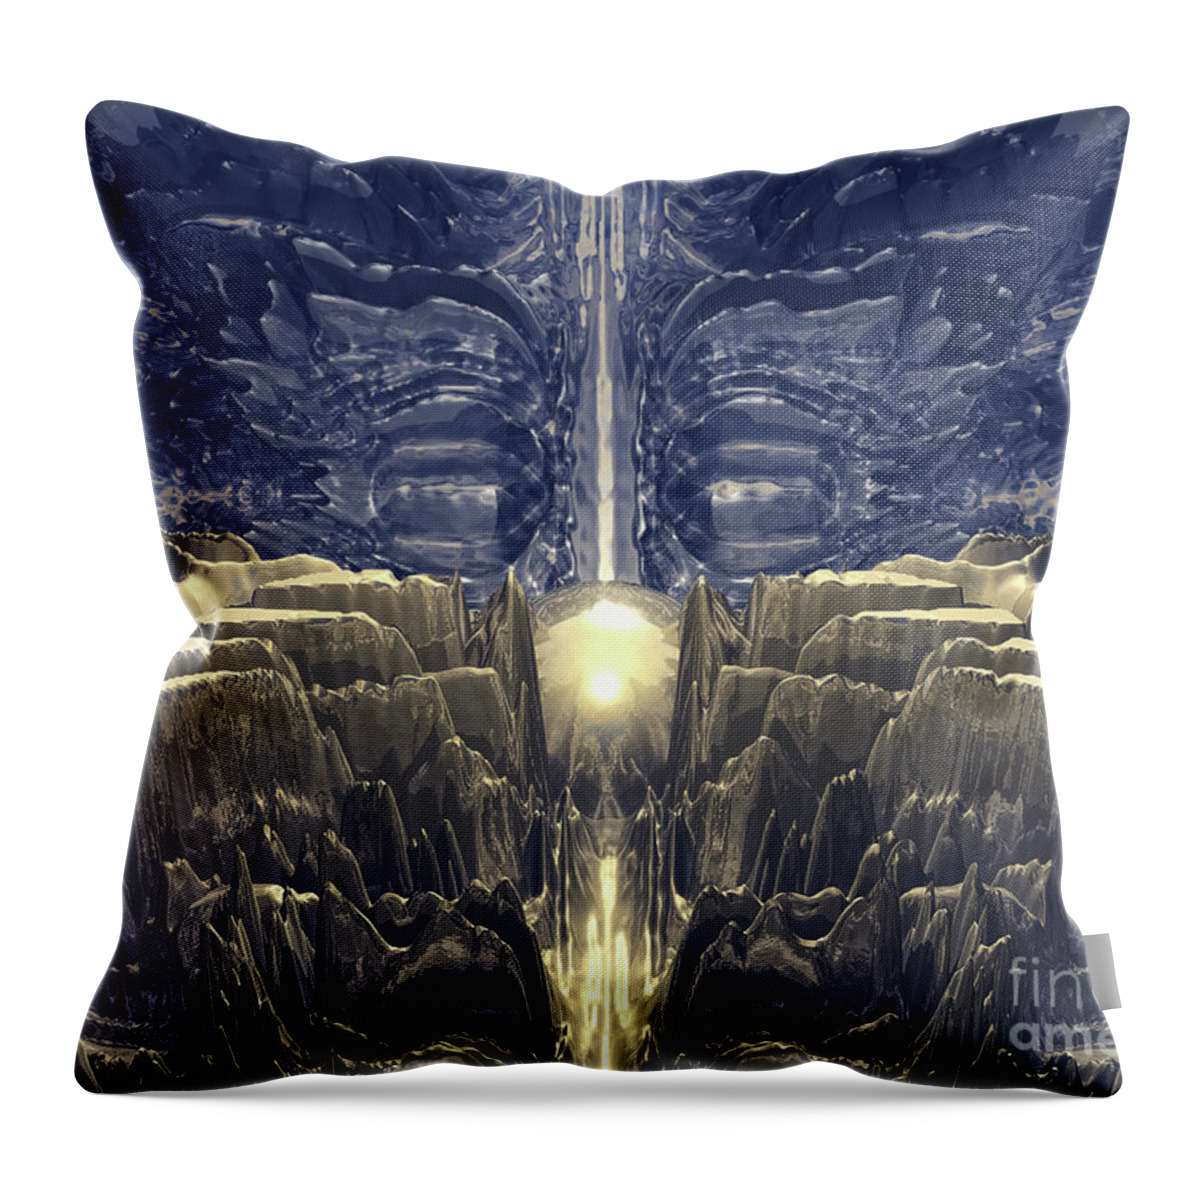 Abstract Throw Pillow featuring the digital art Golden Fractal Environment by Phil Perkins